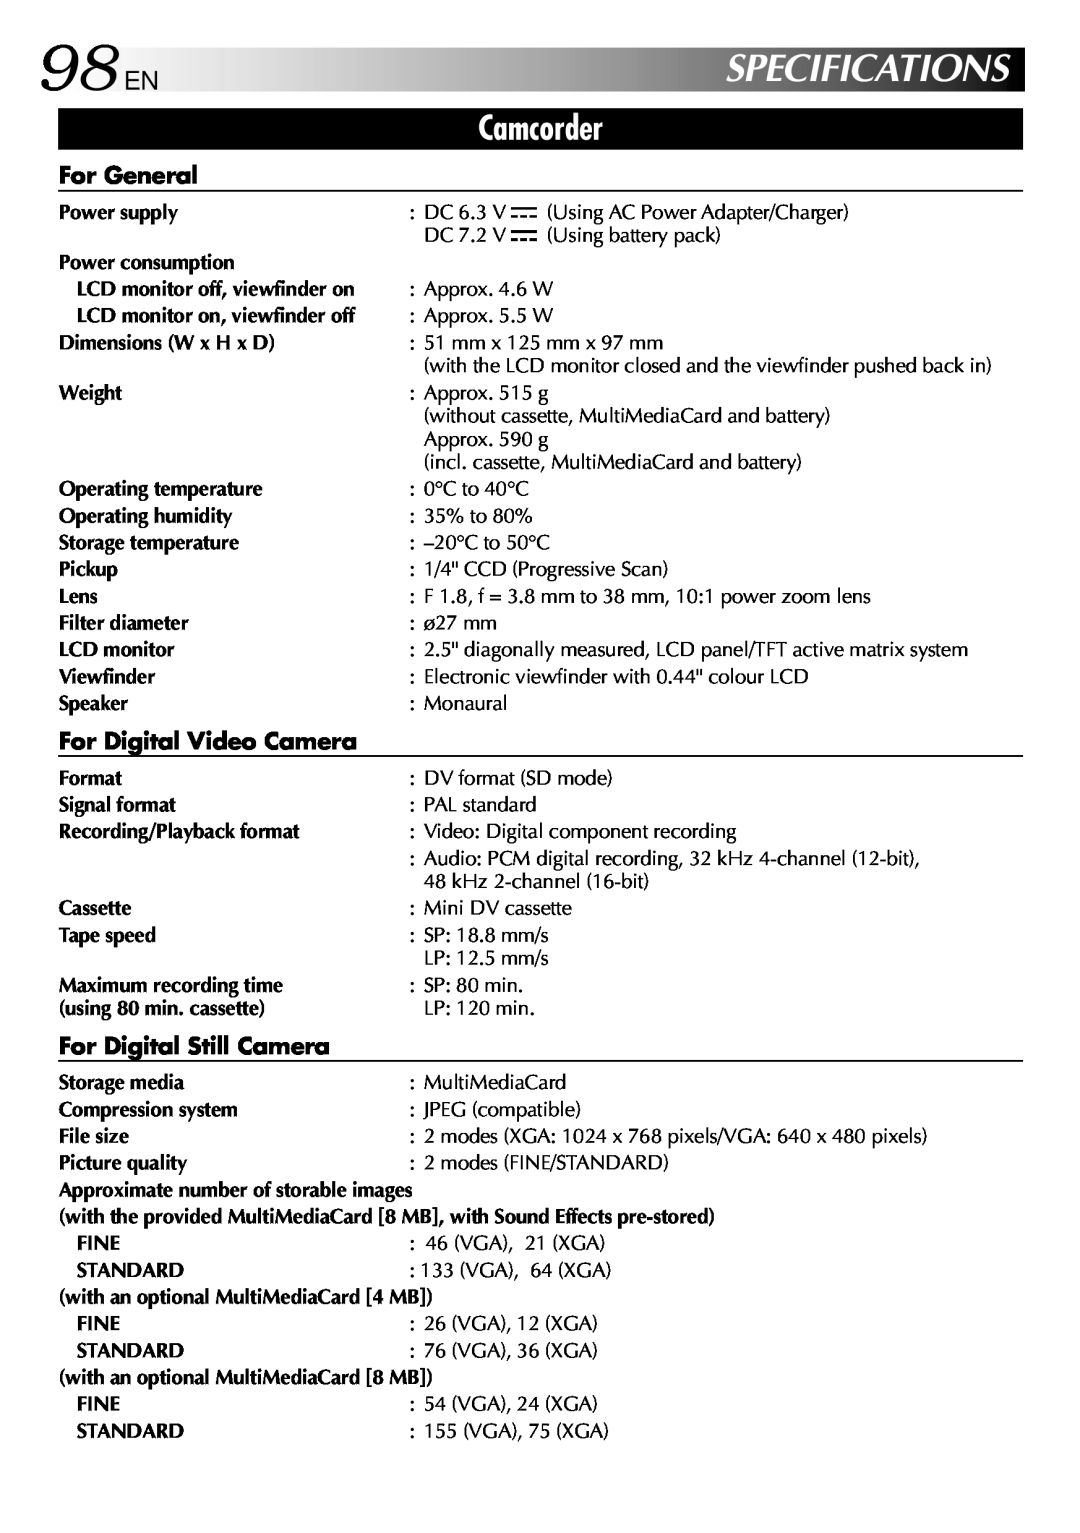 JVC GR-DVX10 98 EN, Specifications, Camcorder, For General, For Digital Video Camera, For Digital Still Camera 